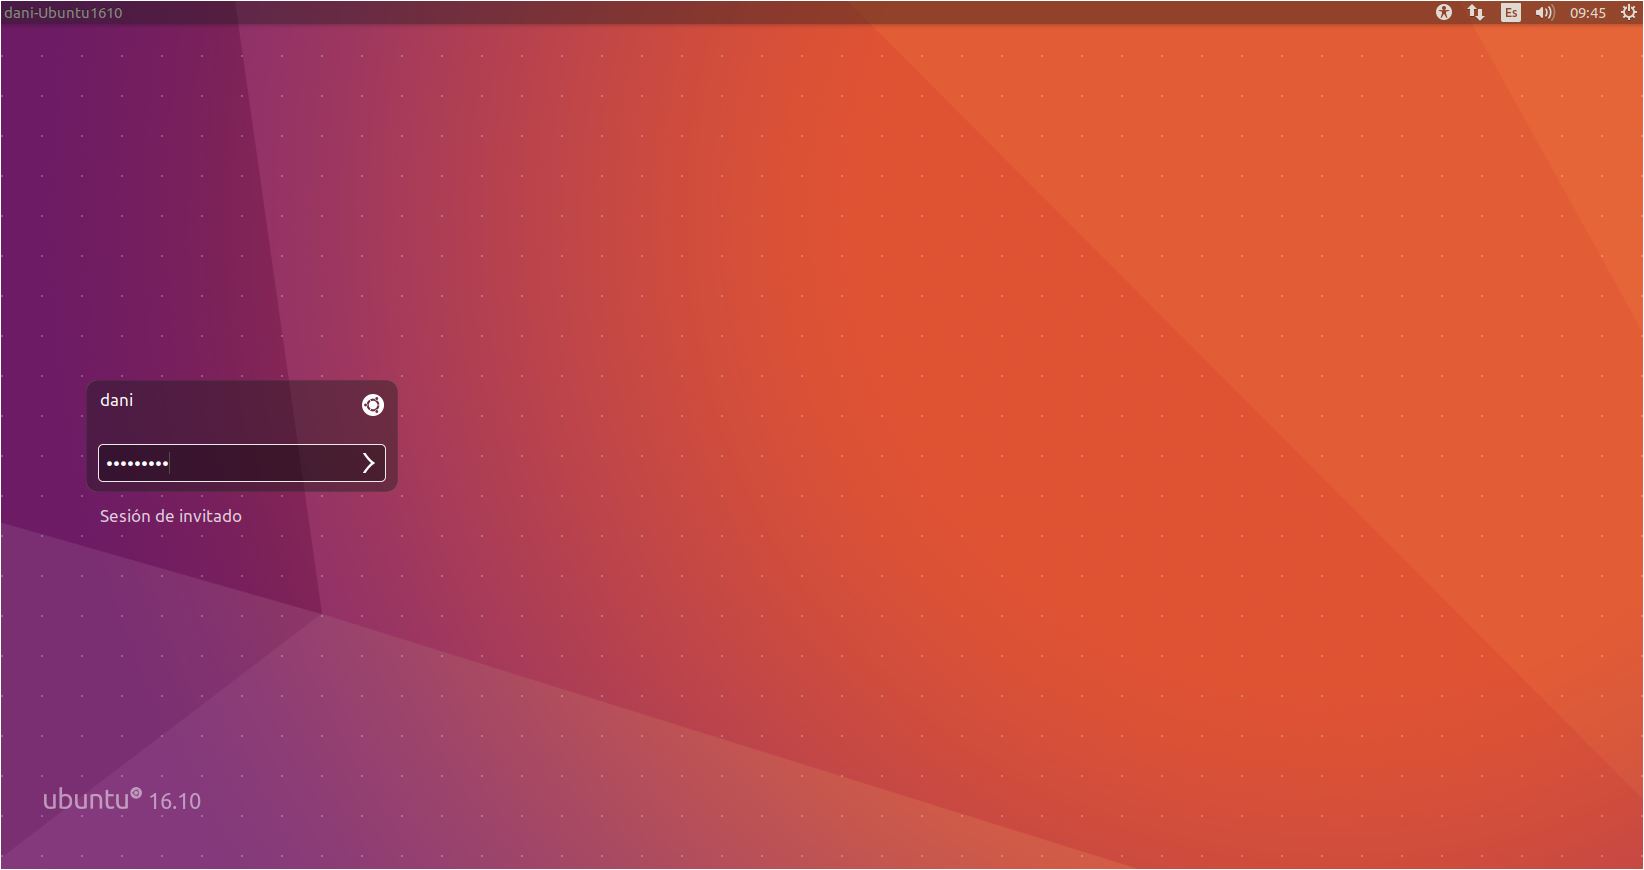 pantalla de login de ubuntu 16.10